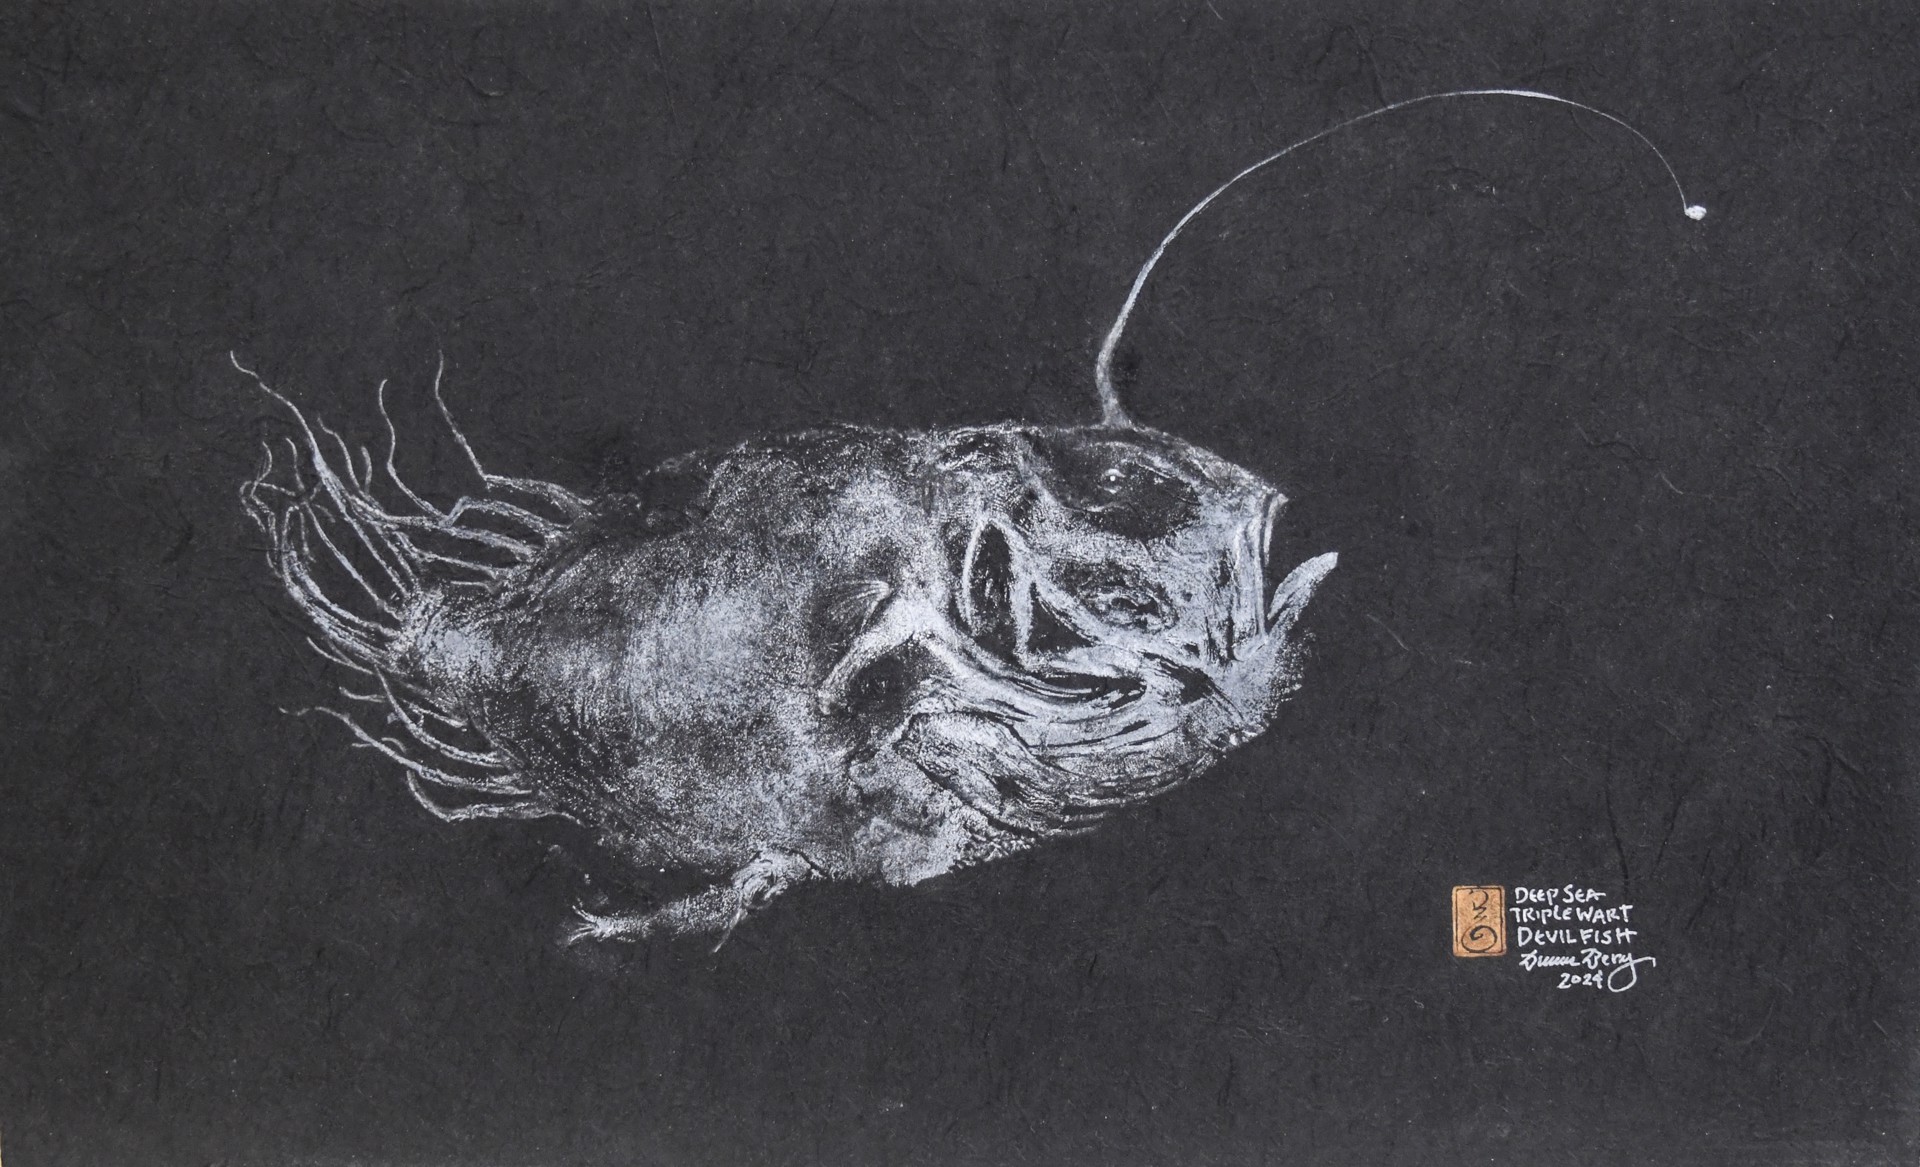 Triplewart Devil Fish Nocturne by Duncan Berry